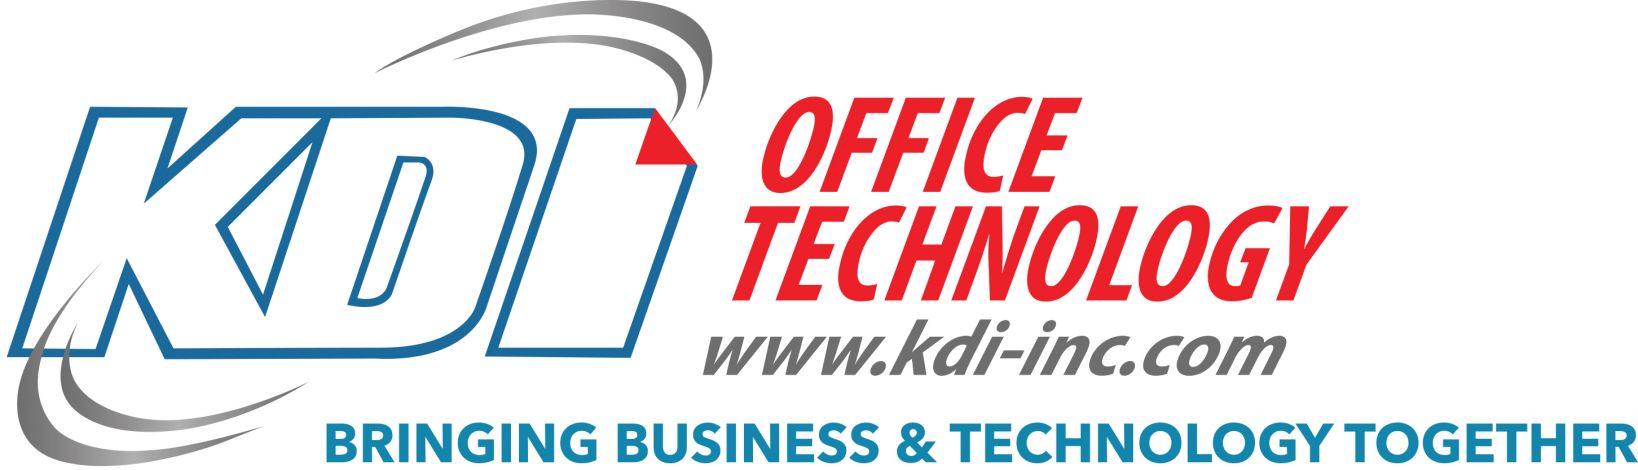 KDI Office Technology.jpg